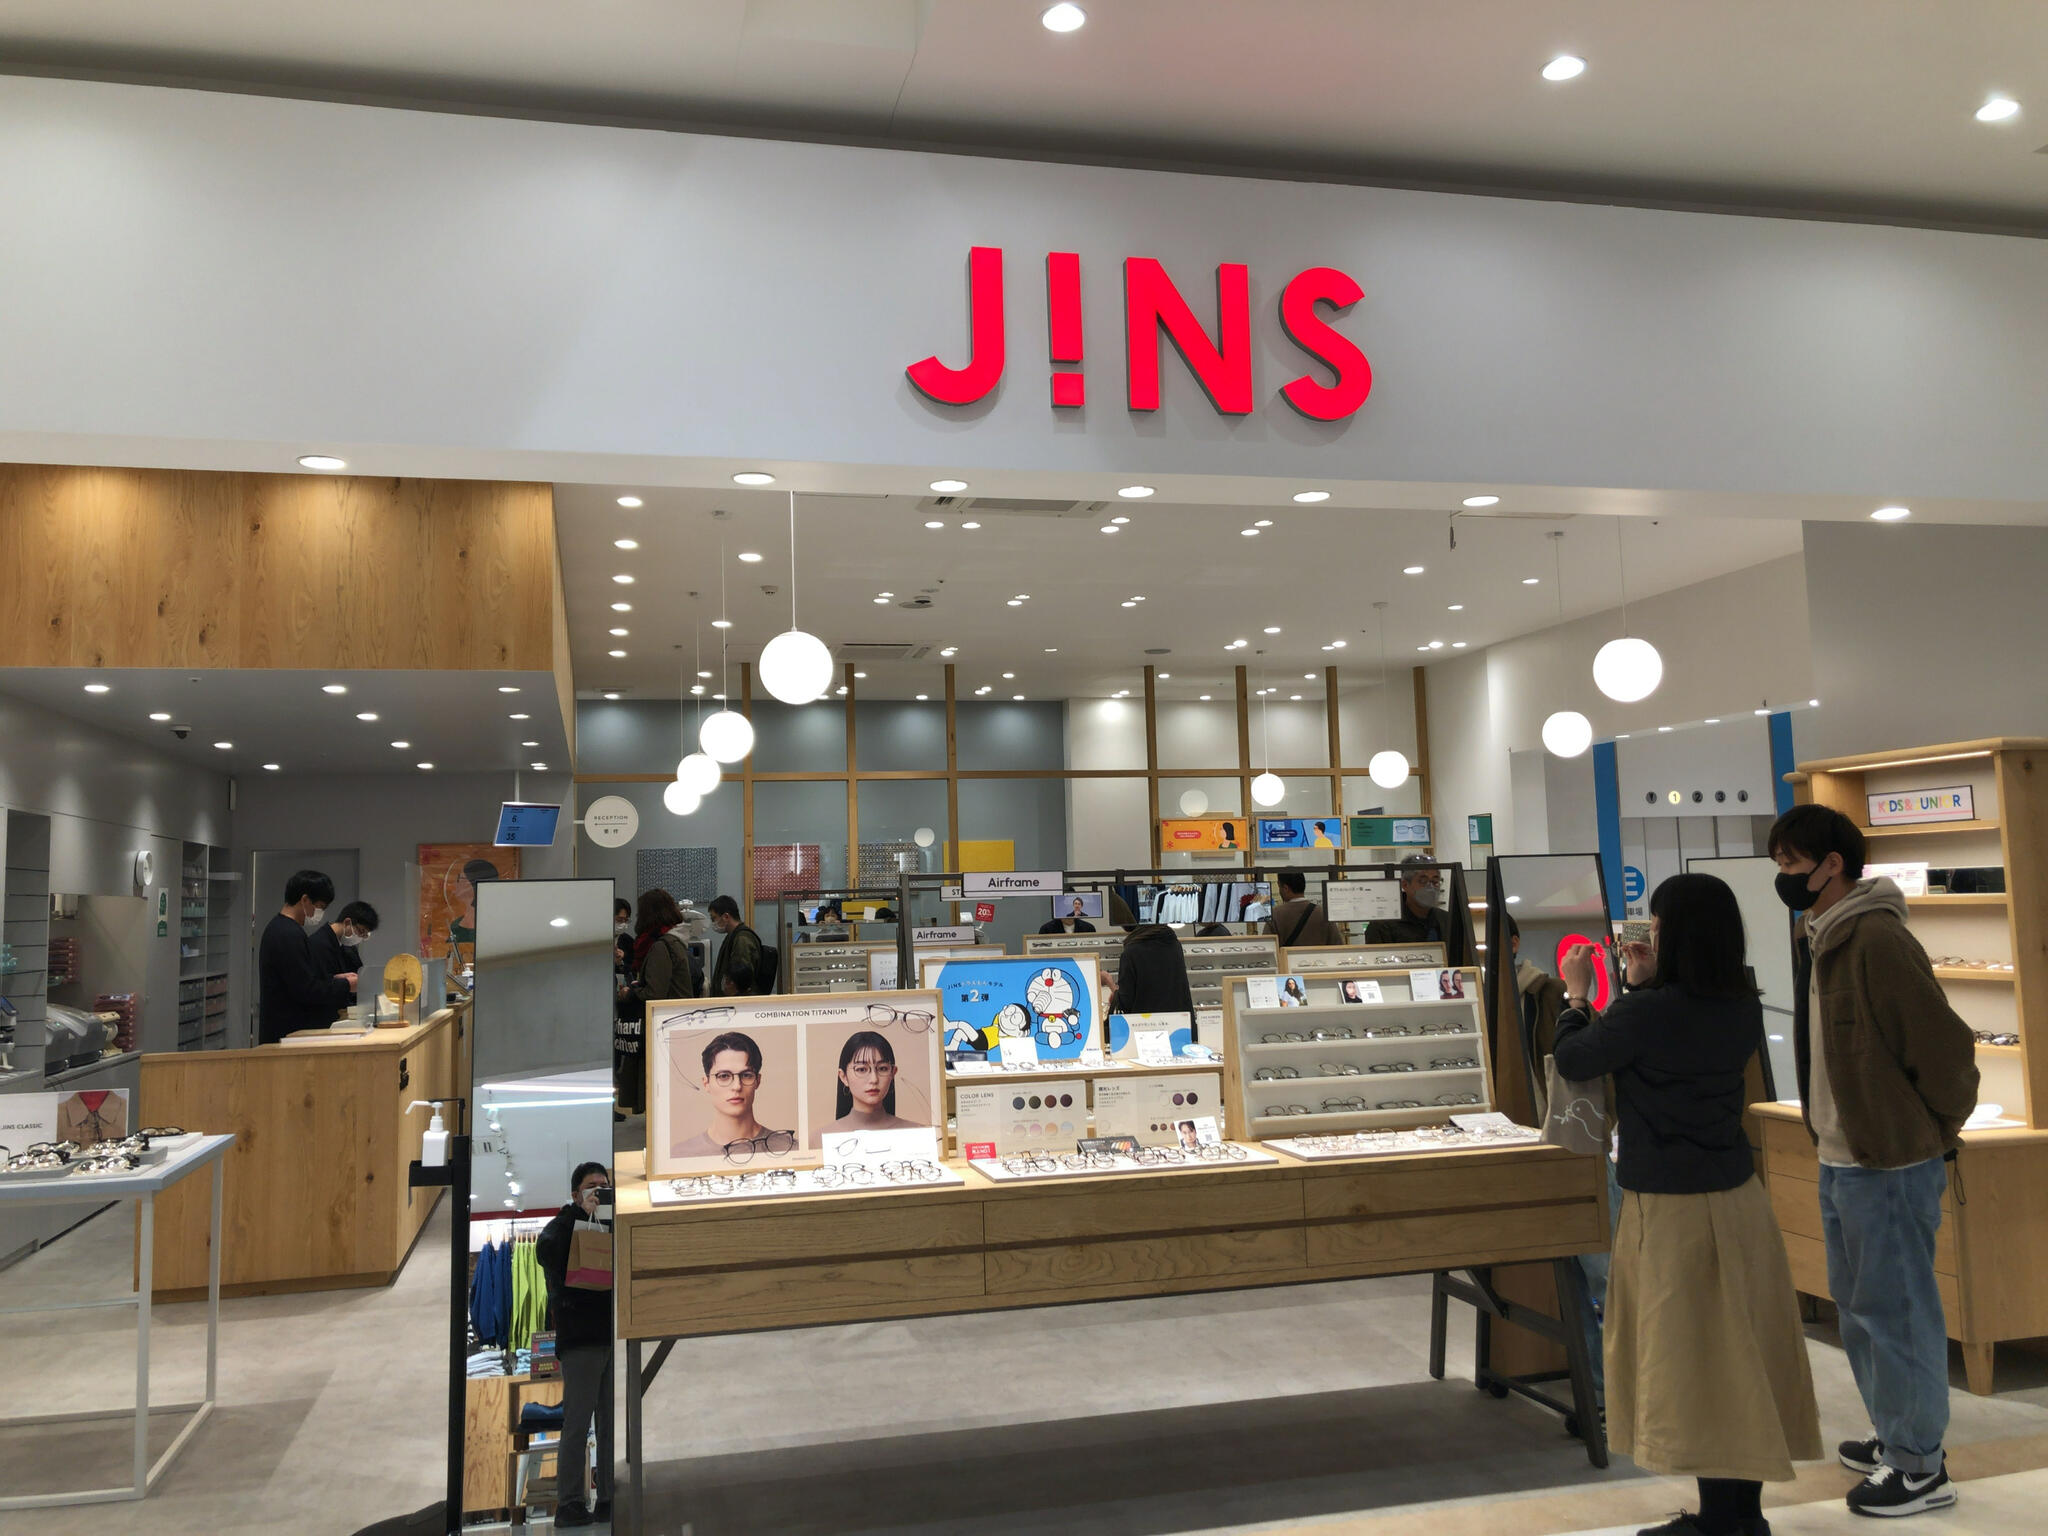 JINS ファボーレ富山店の代表写真1